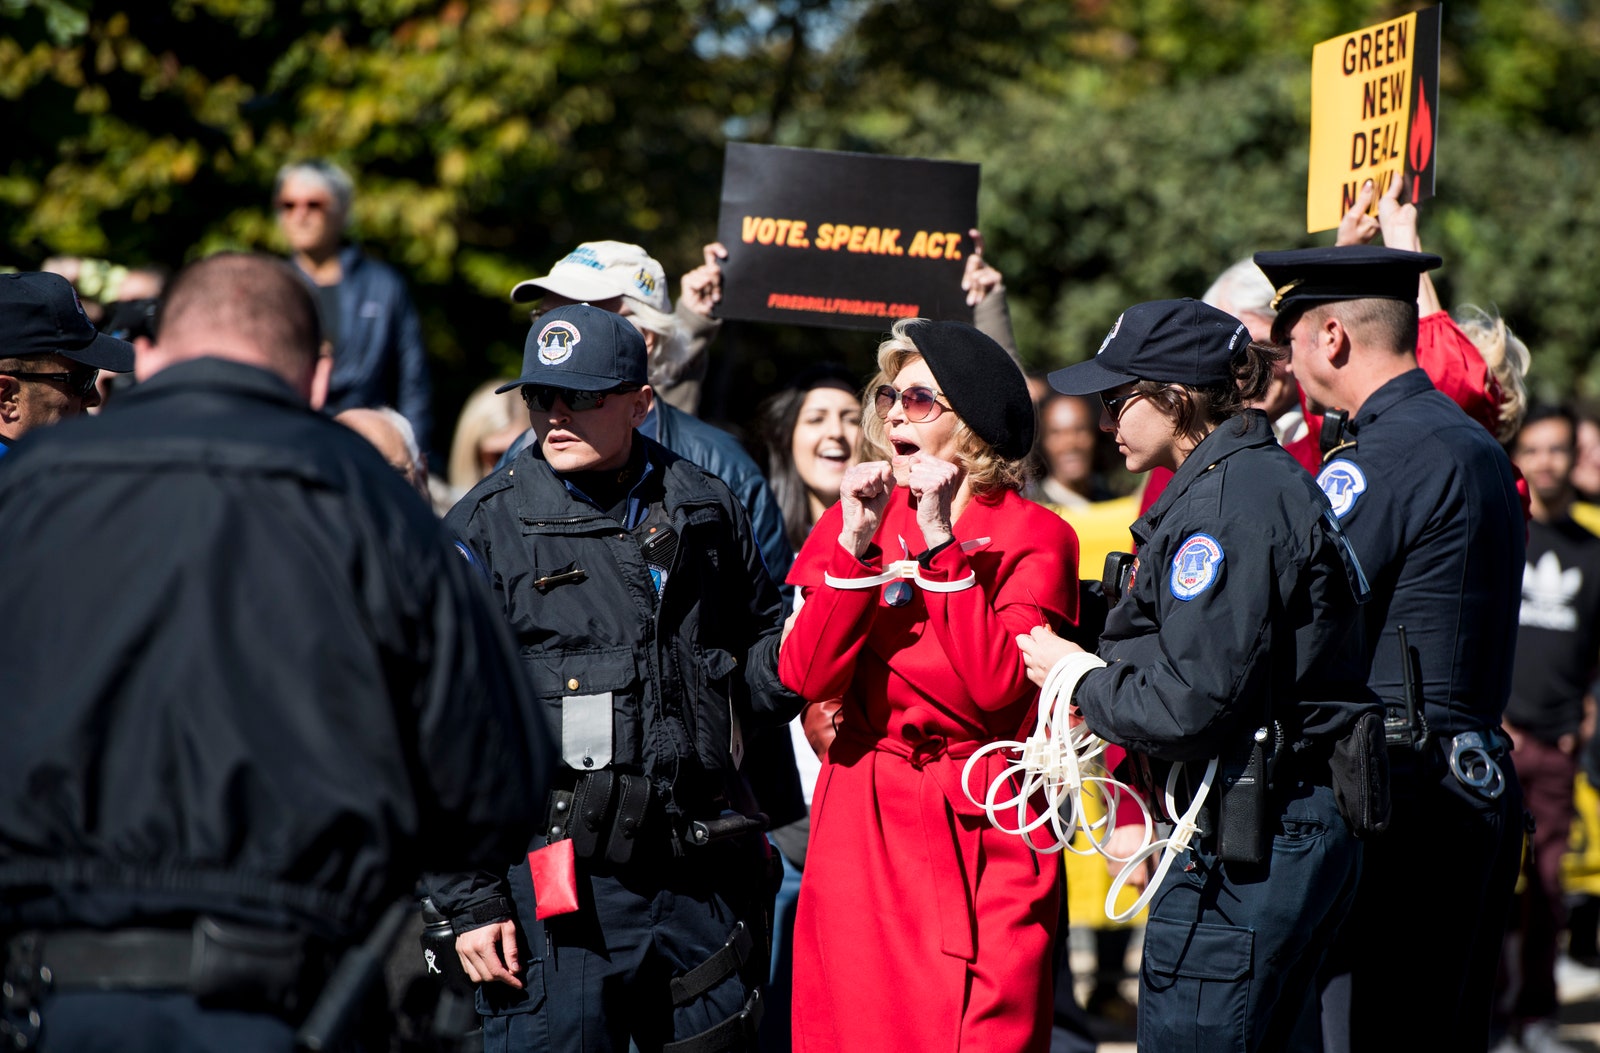 Джейн Фонду арестовали на акции протеста против изменения климата